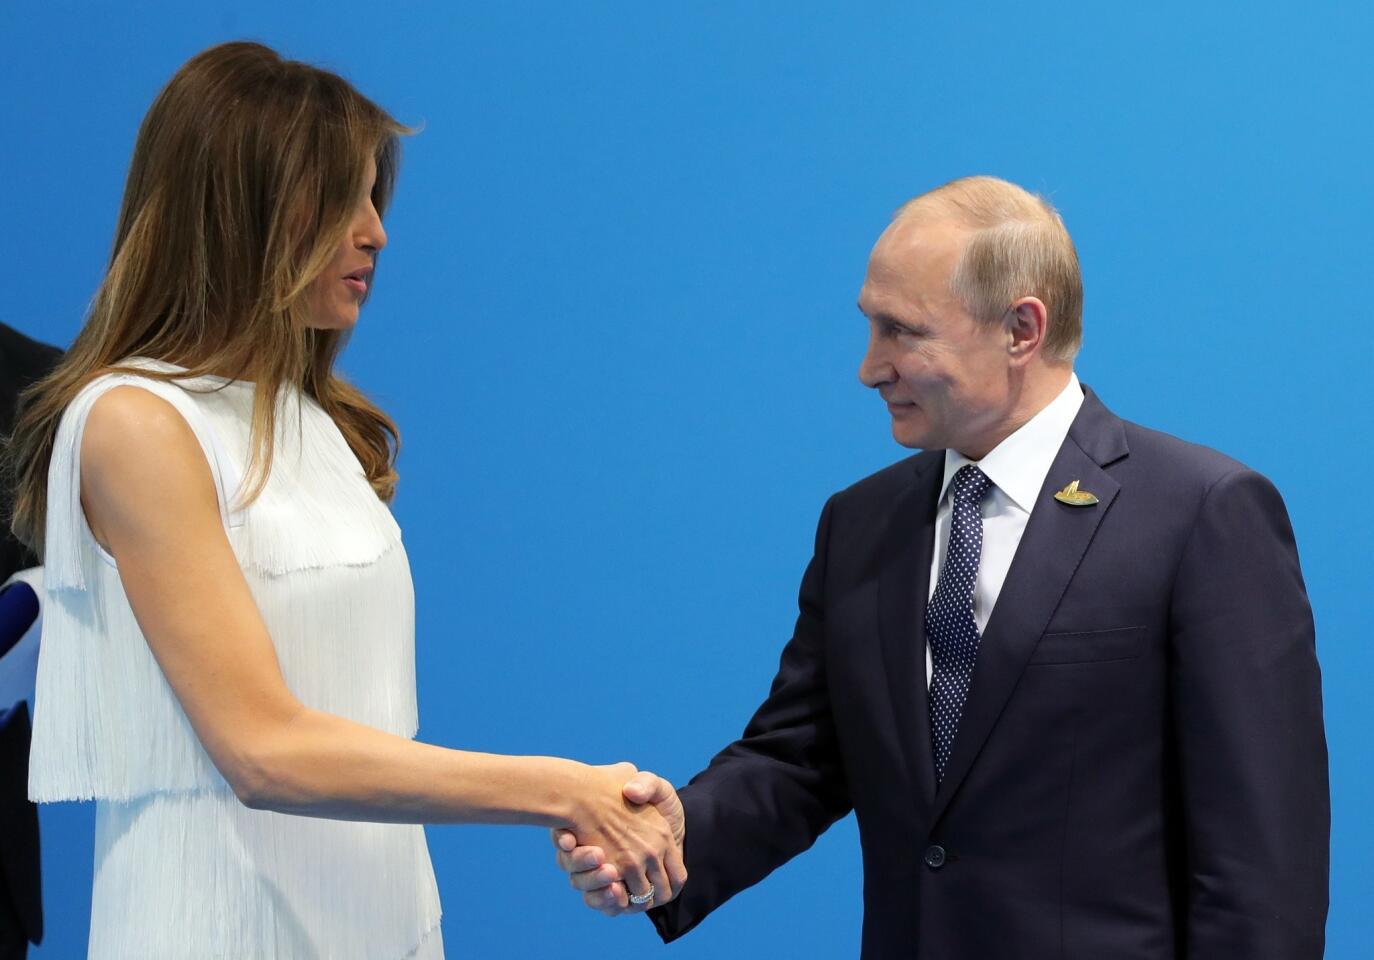 Melania Trump and Vladimir Putin